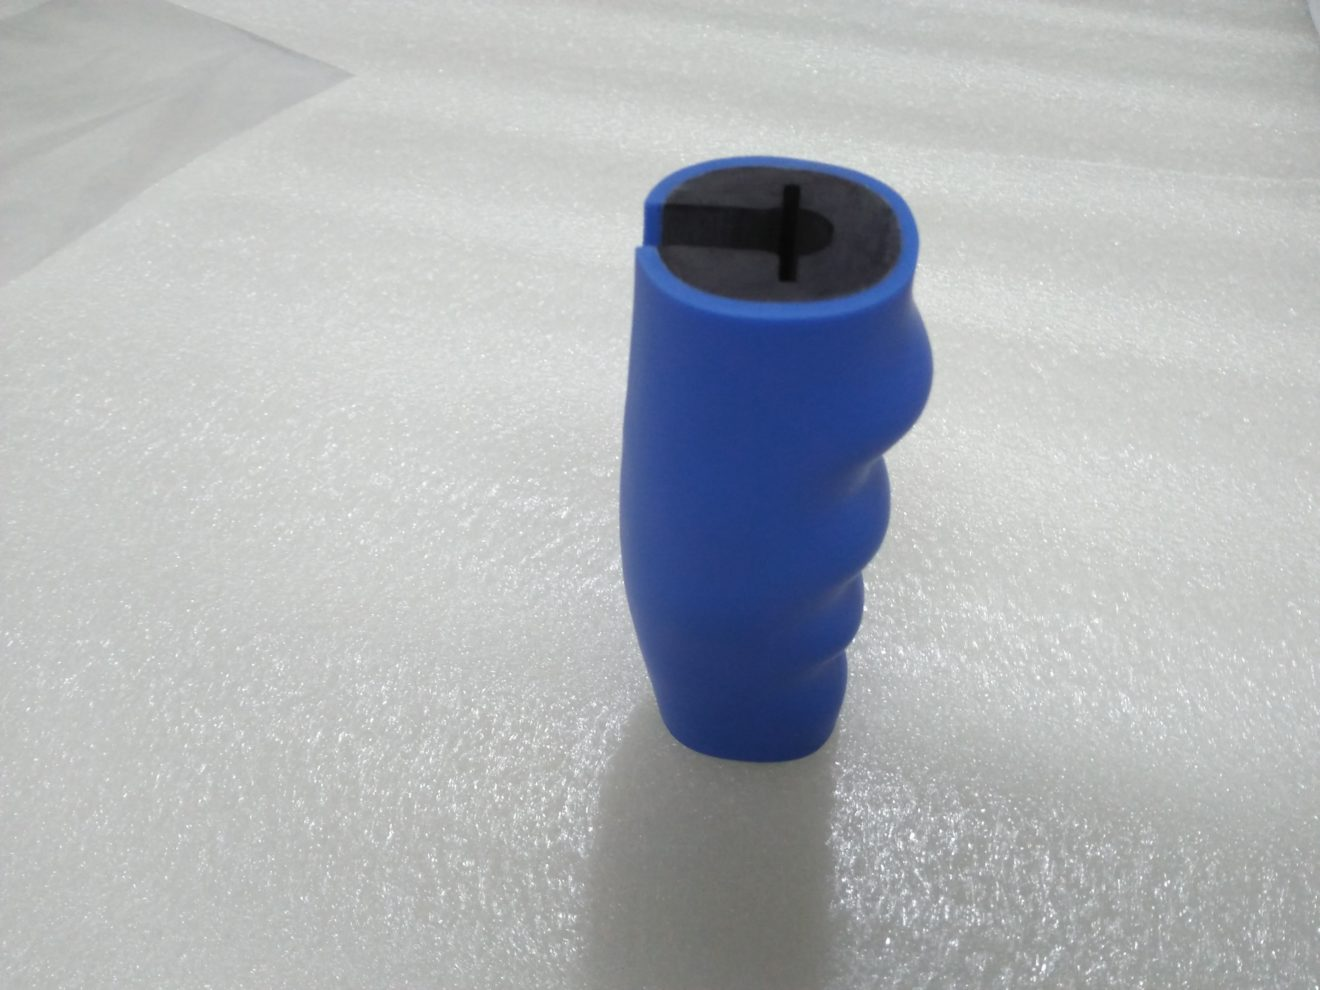 A blue plastic handle